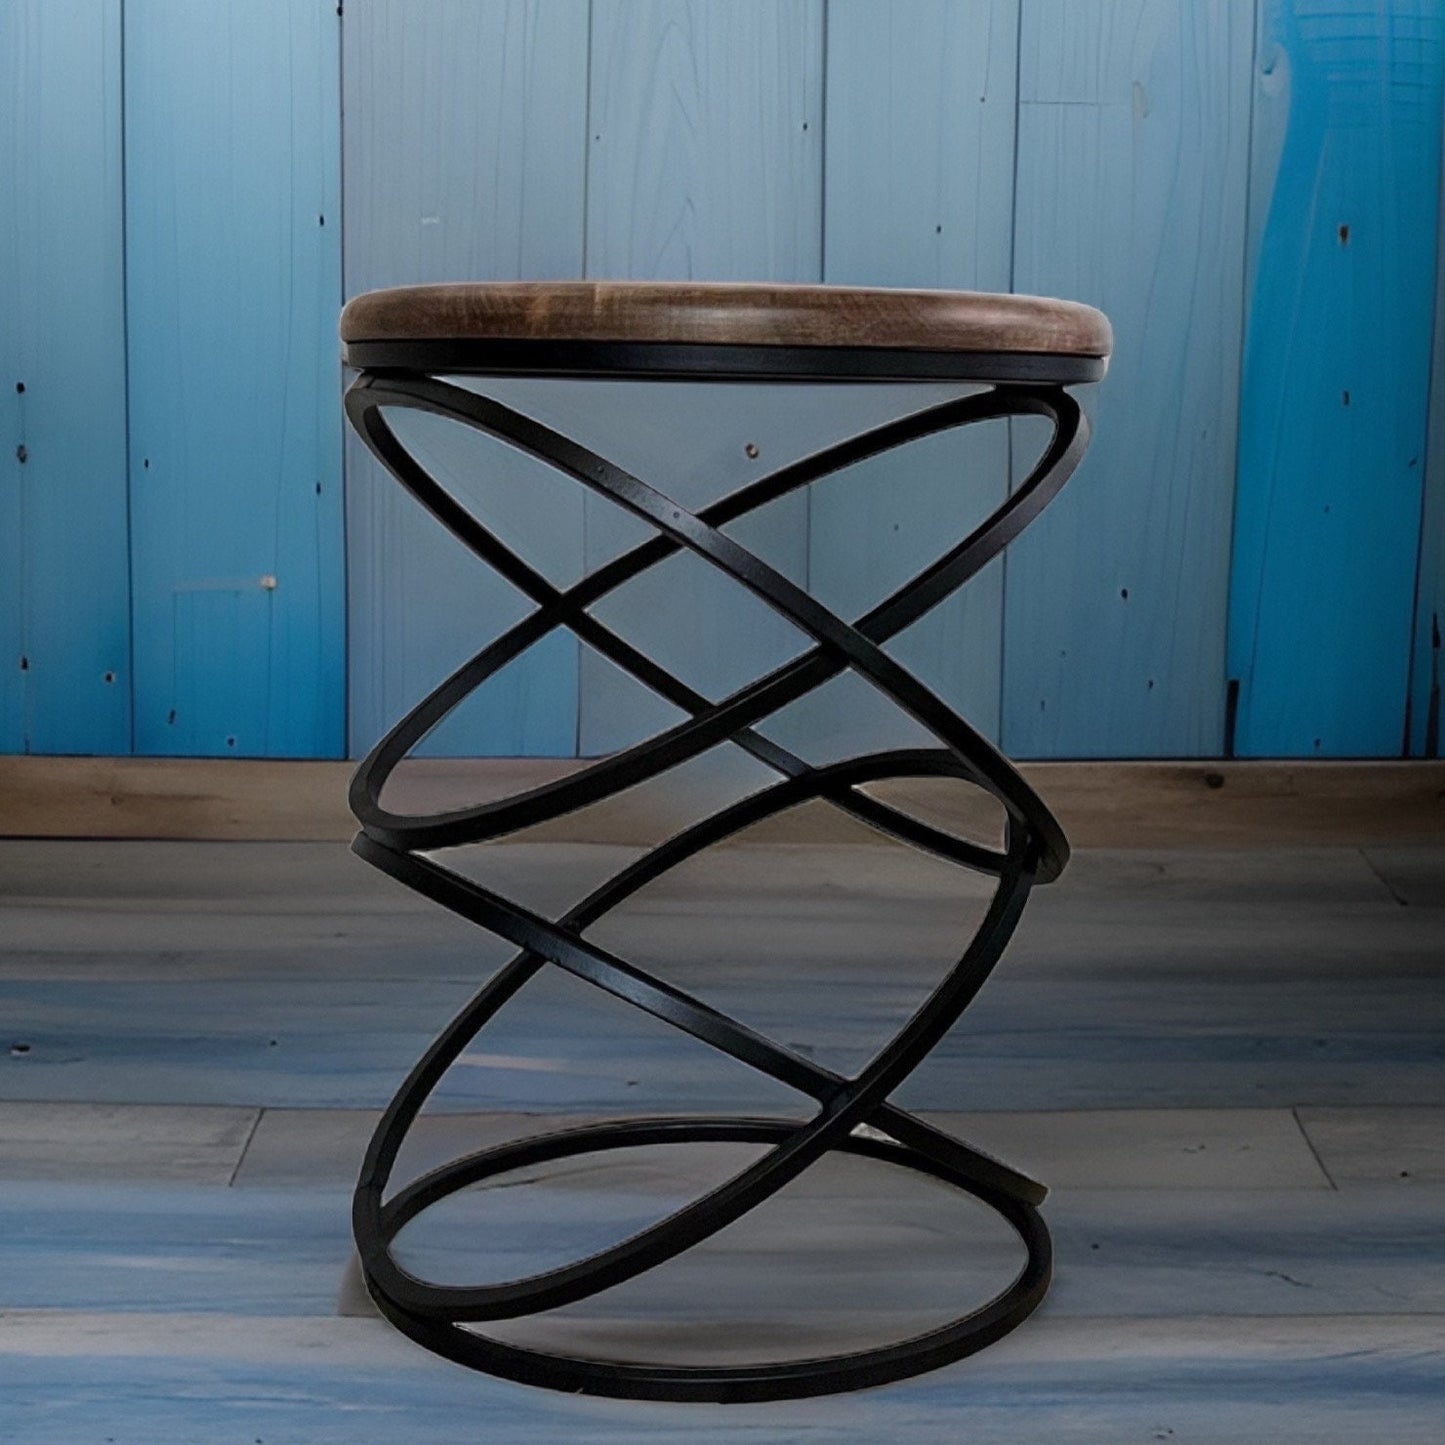 Maxlume - Rings Drum Side Coffee Table Industrial | Vintage Style | Plant Floor Stand Sofa End Retro Solid Wood Metal